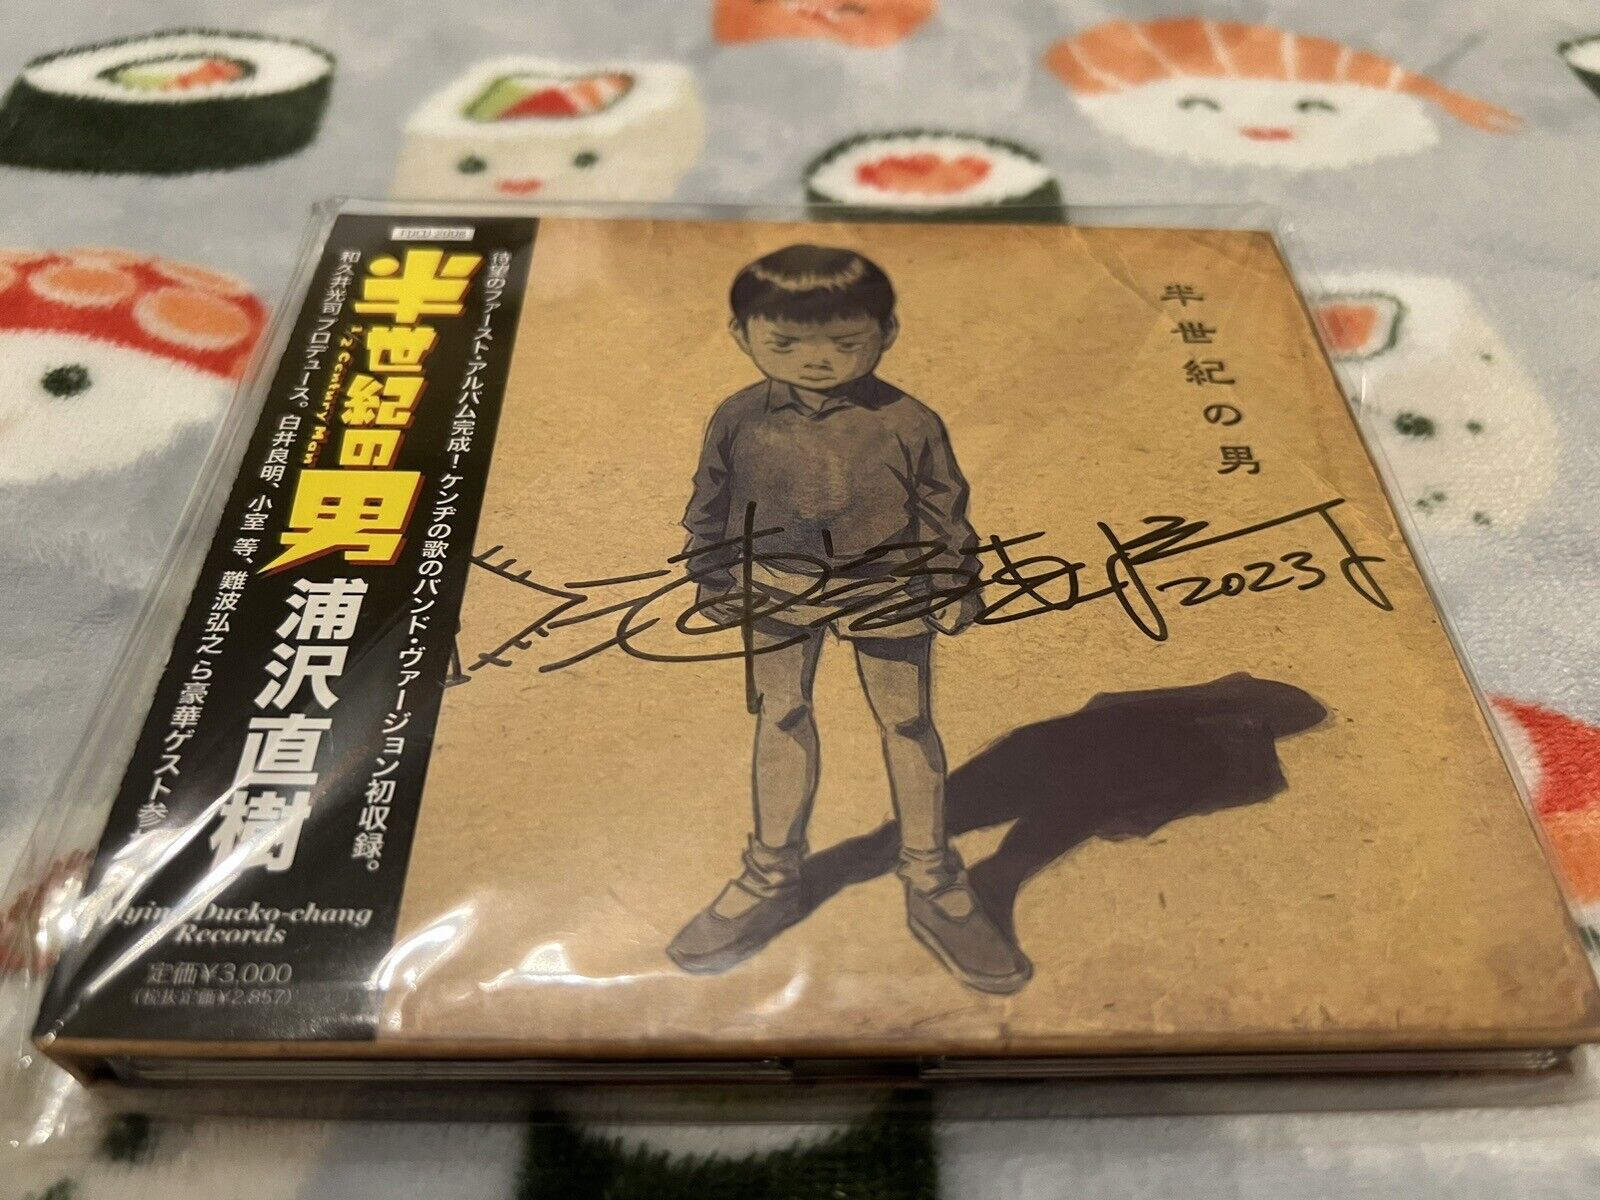 Naoki Uraswa Signed CD Bob Lennon 20th Century Boys (Still Sealed)